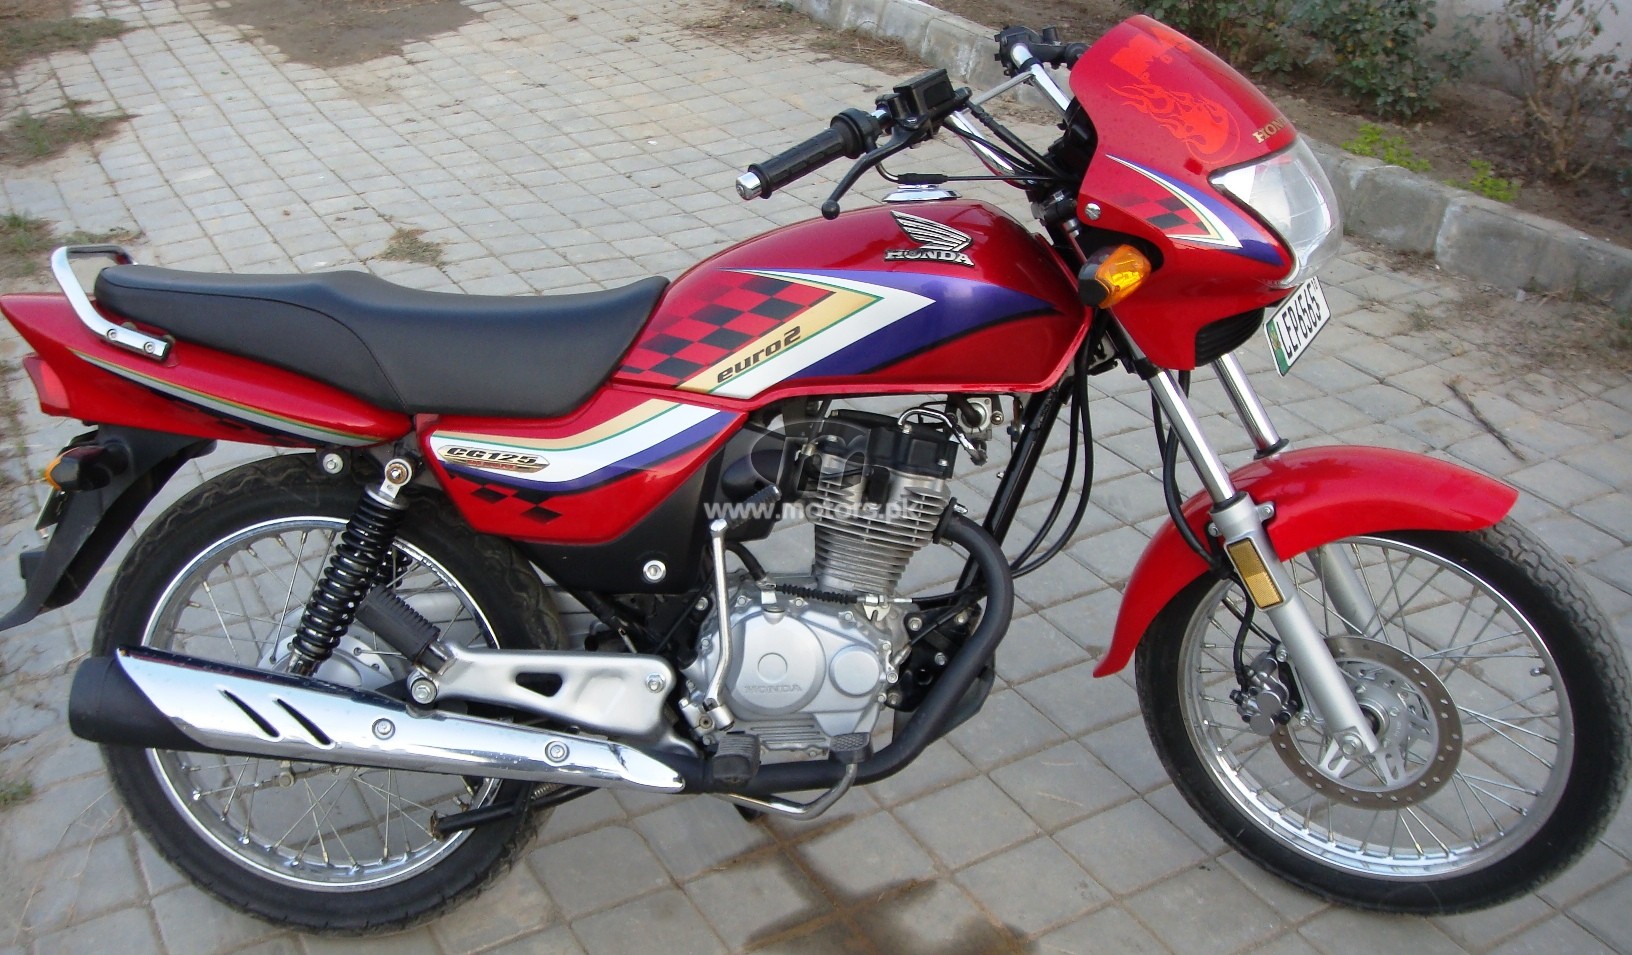 2010 Honda Motorcycles Pakistan Bliblinews Com